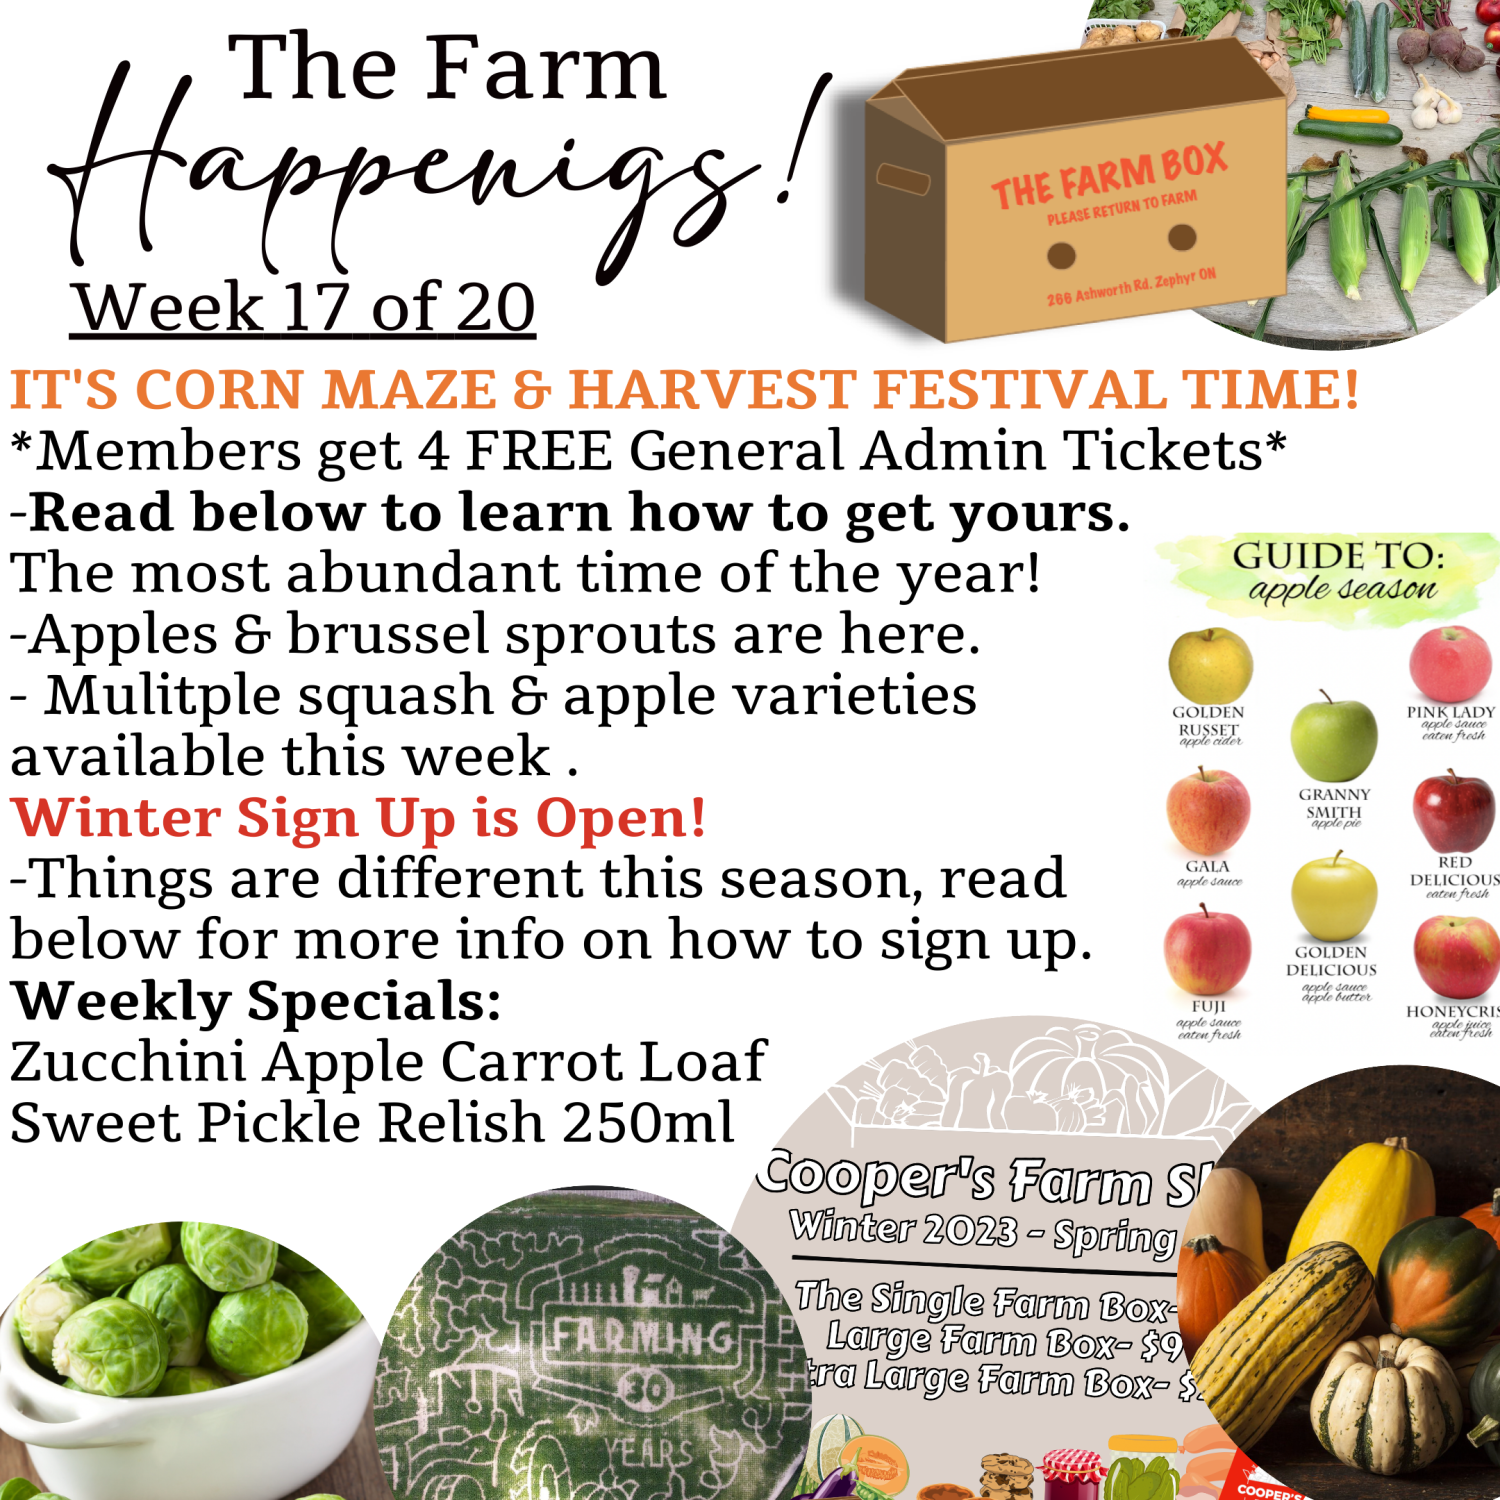 Previous Happening: "The Farm Box"-Coopers CSA Farm Farm Happenings Week 17